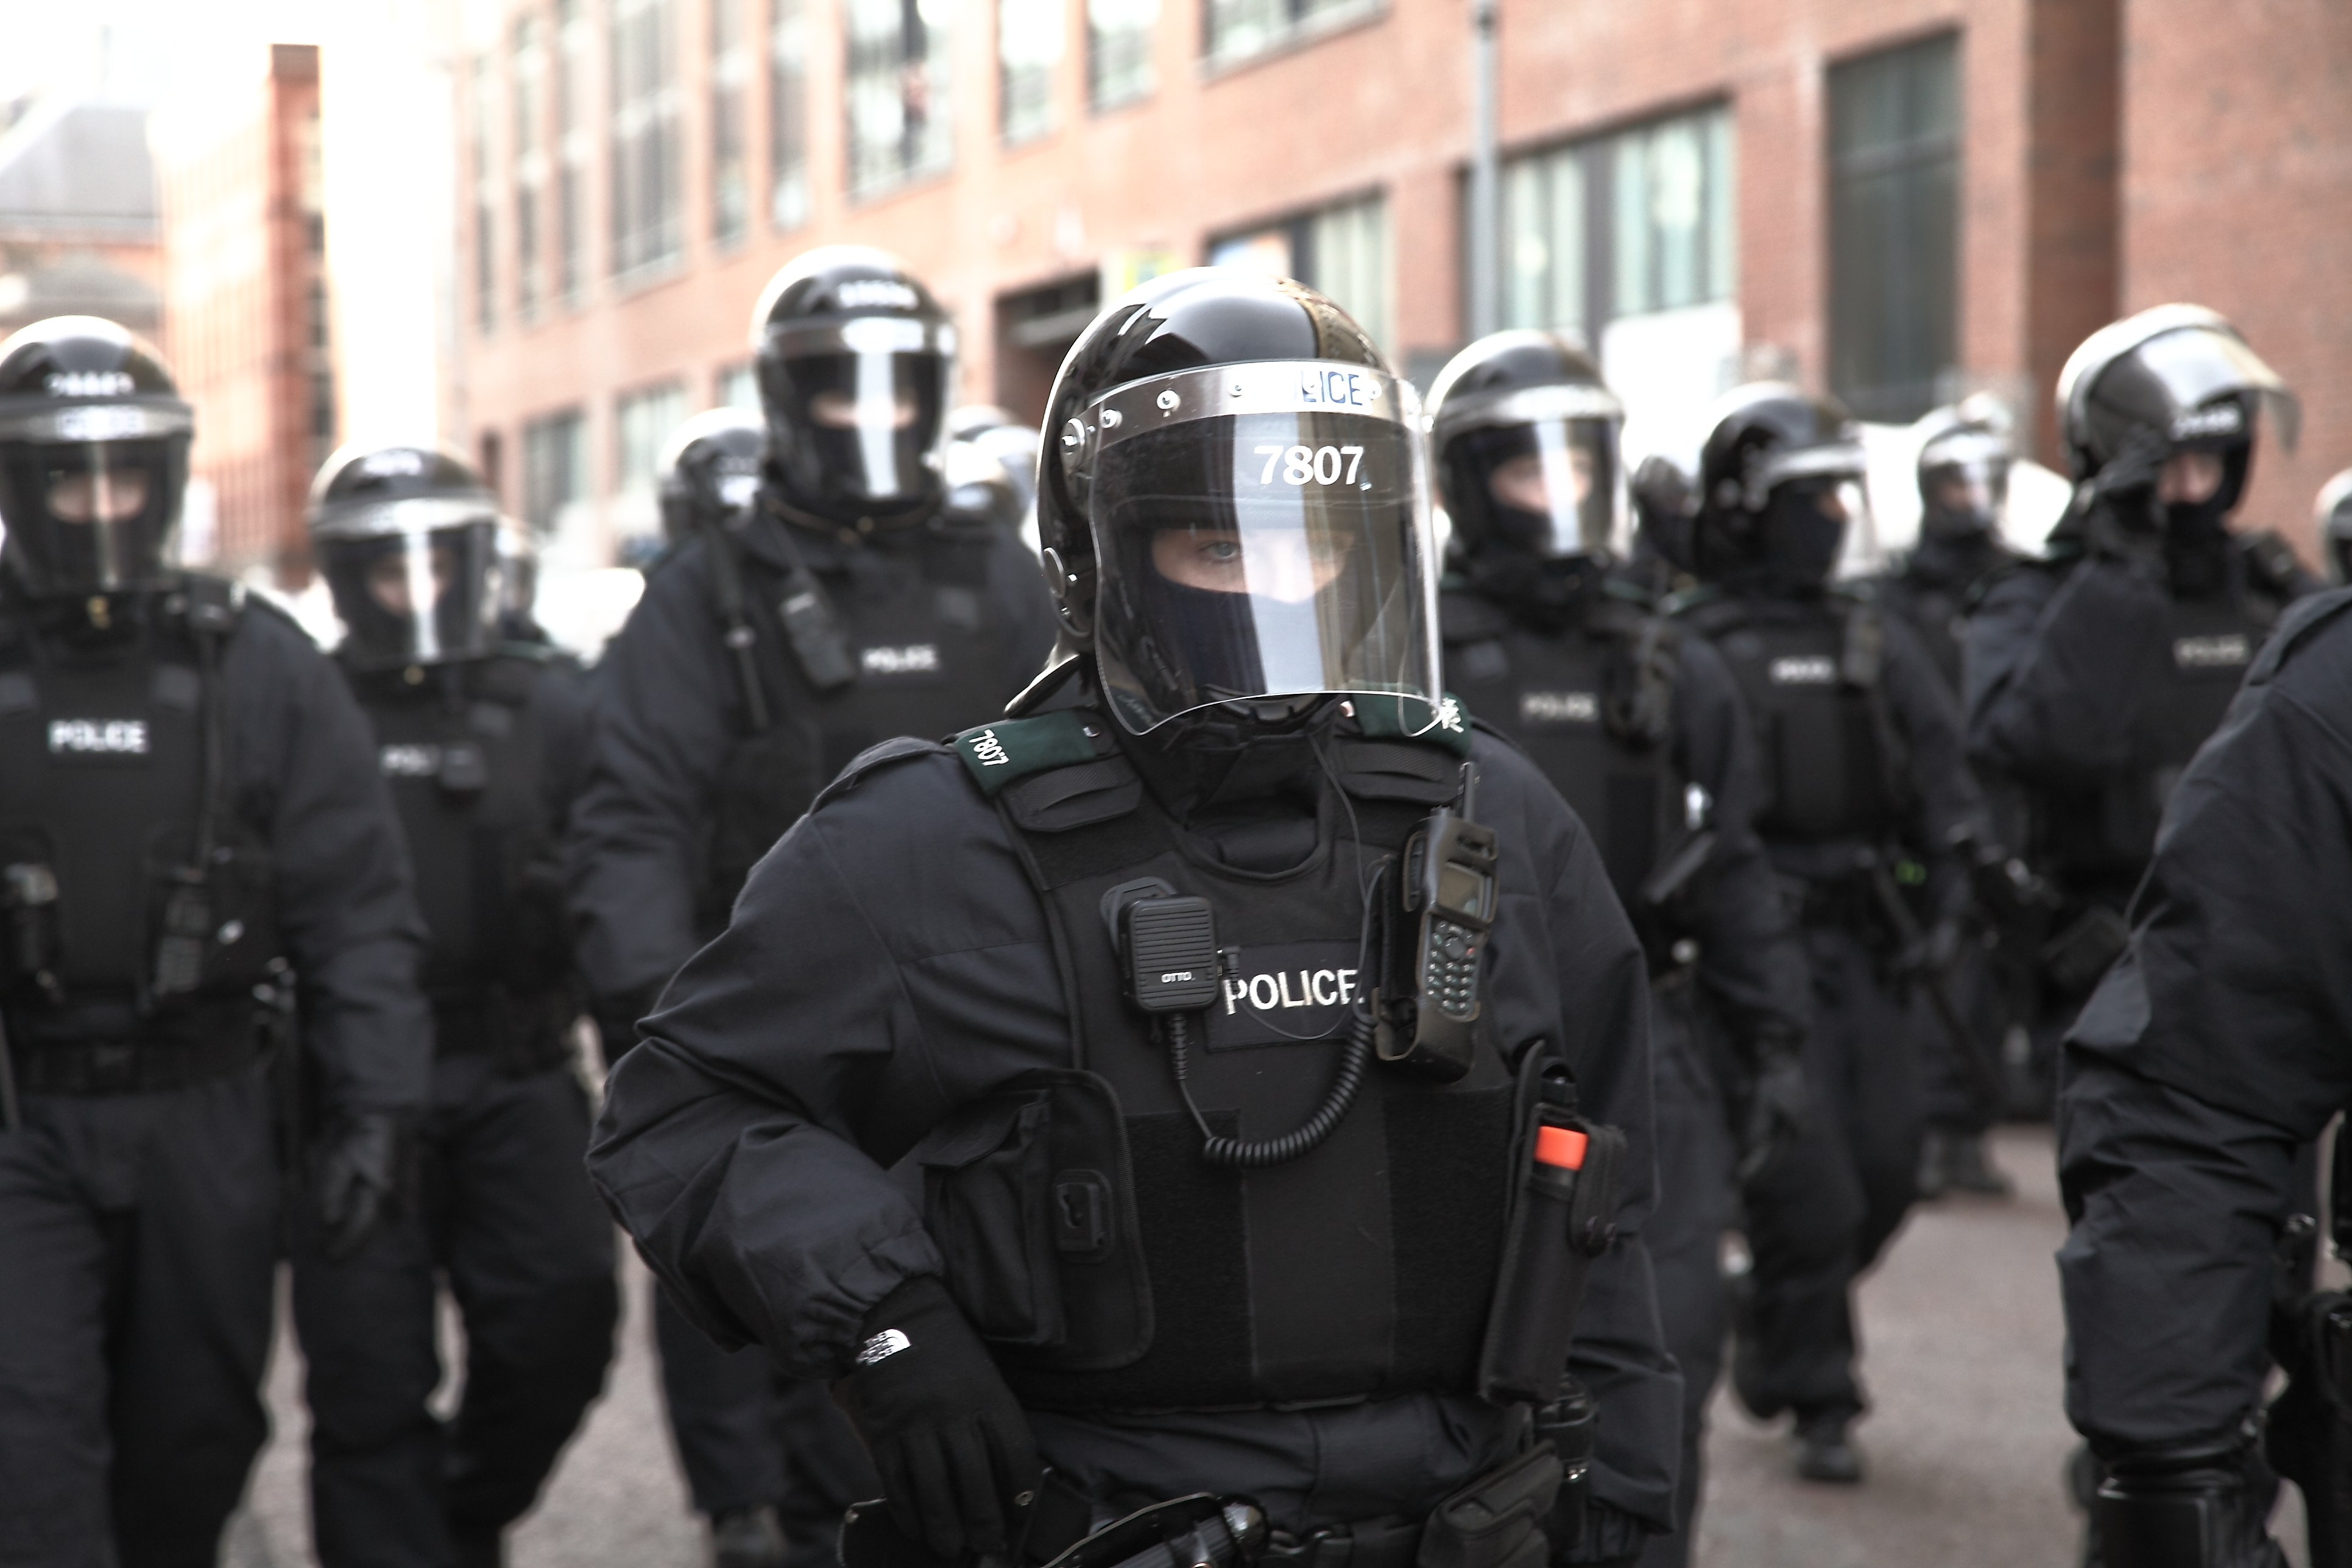 Riot police Image Joshua Hayes Flickr